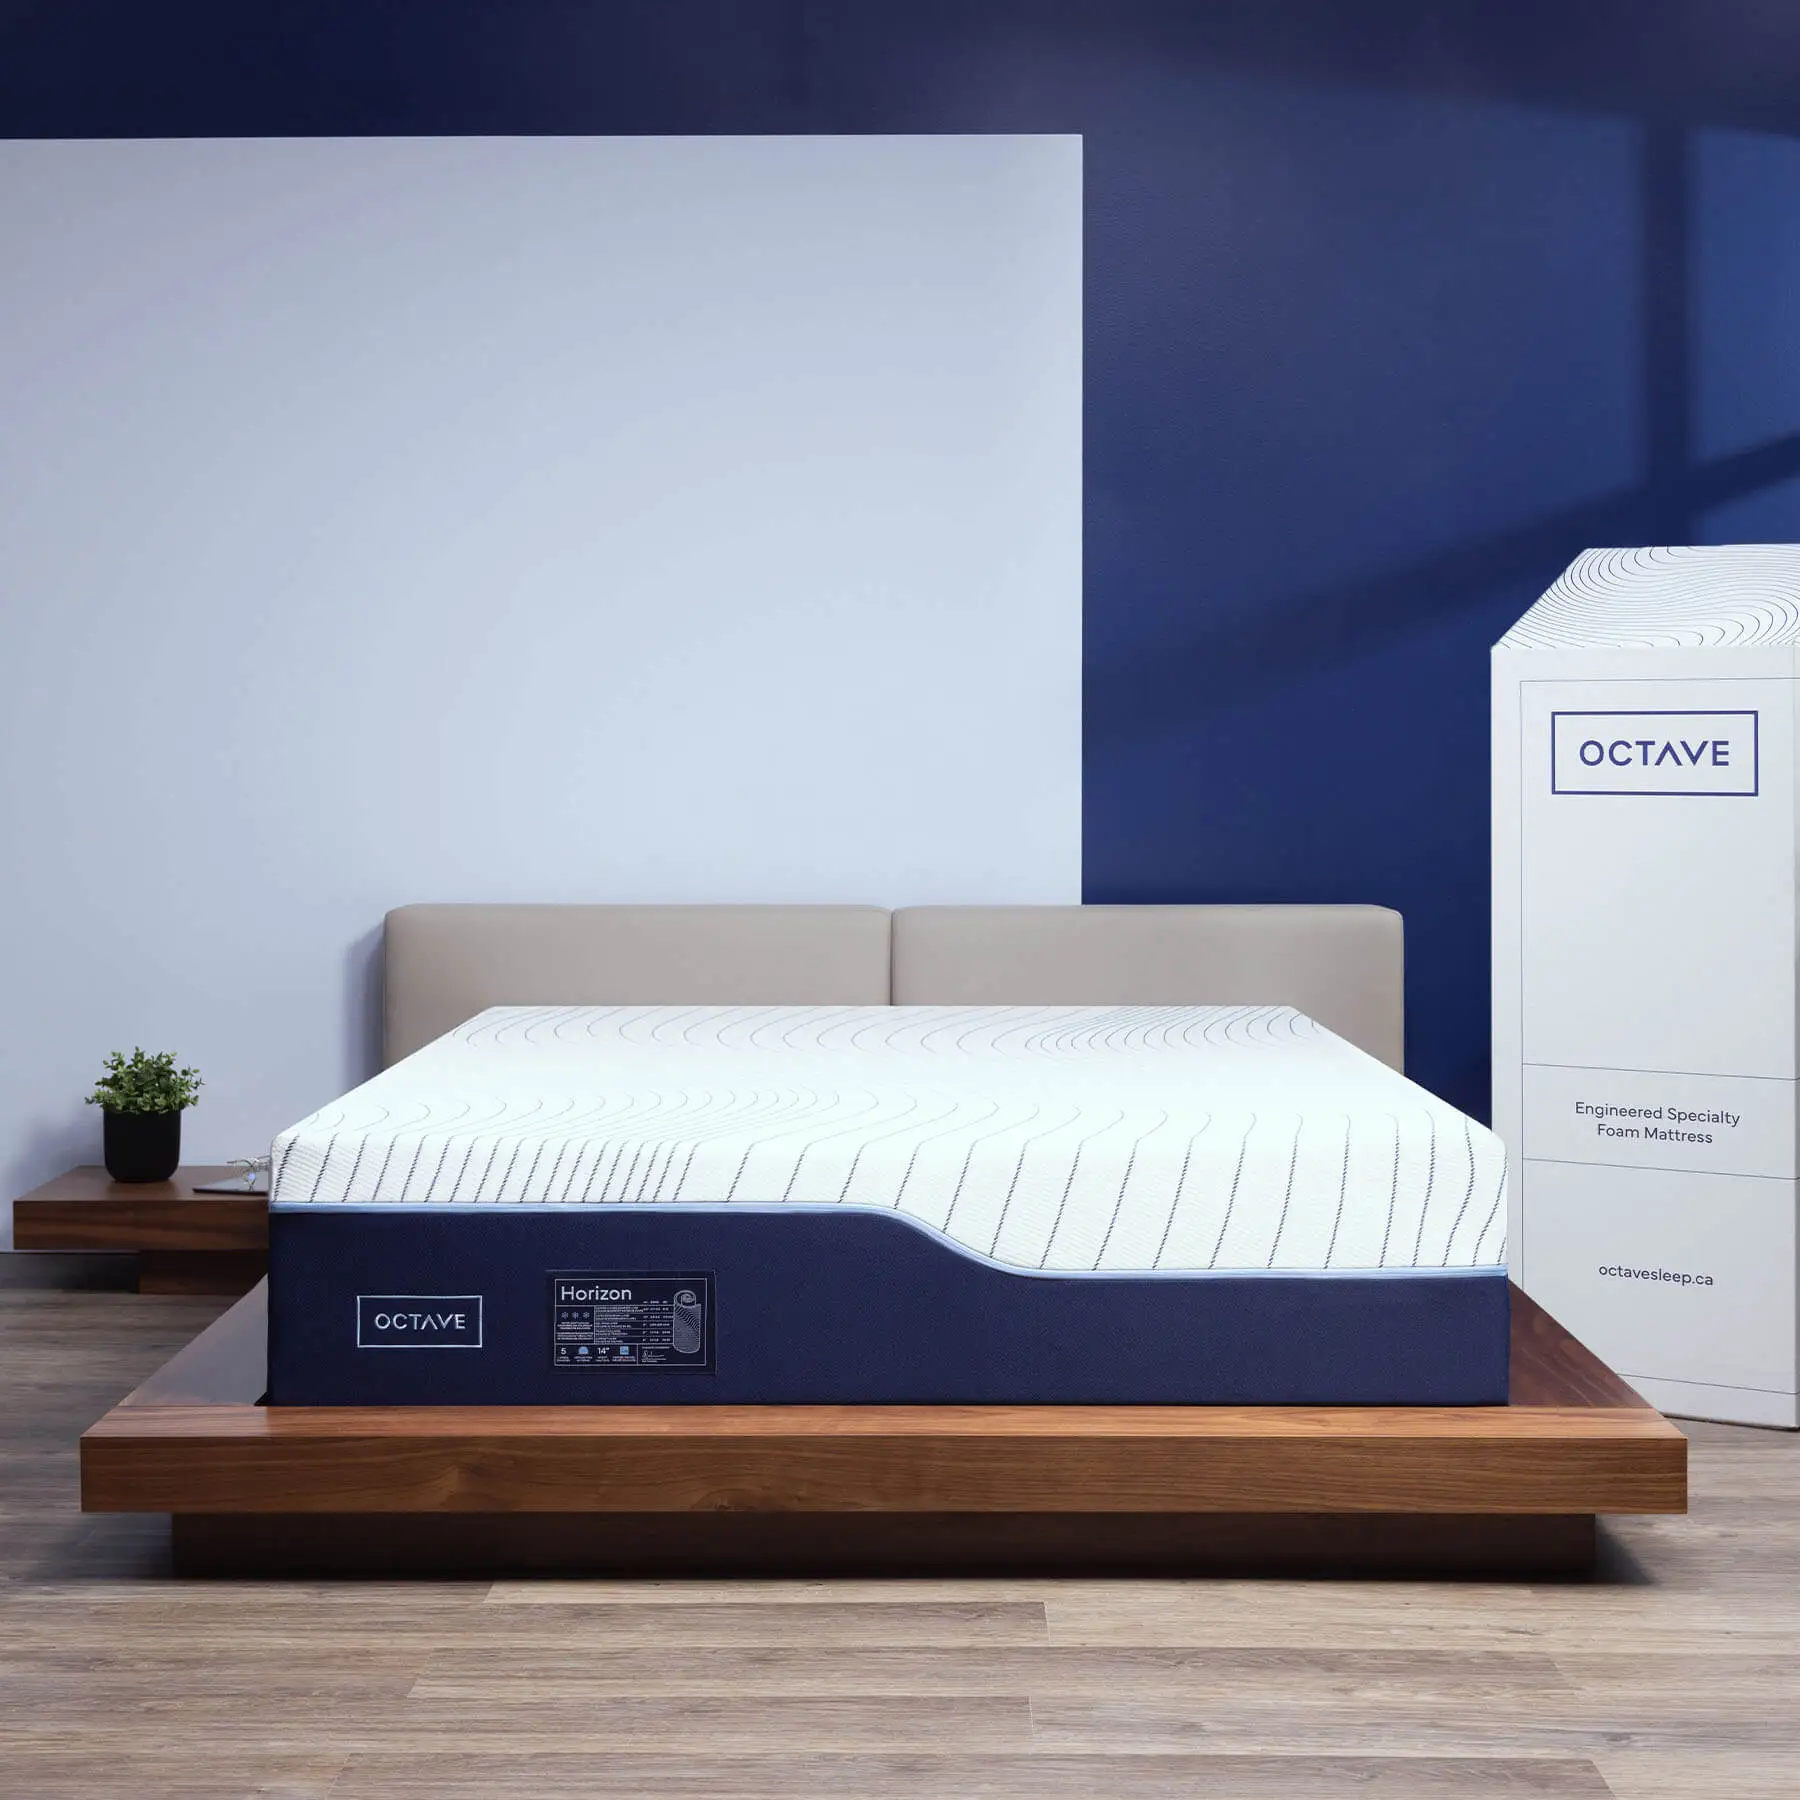 Octave Horizon mattress